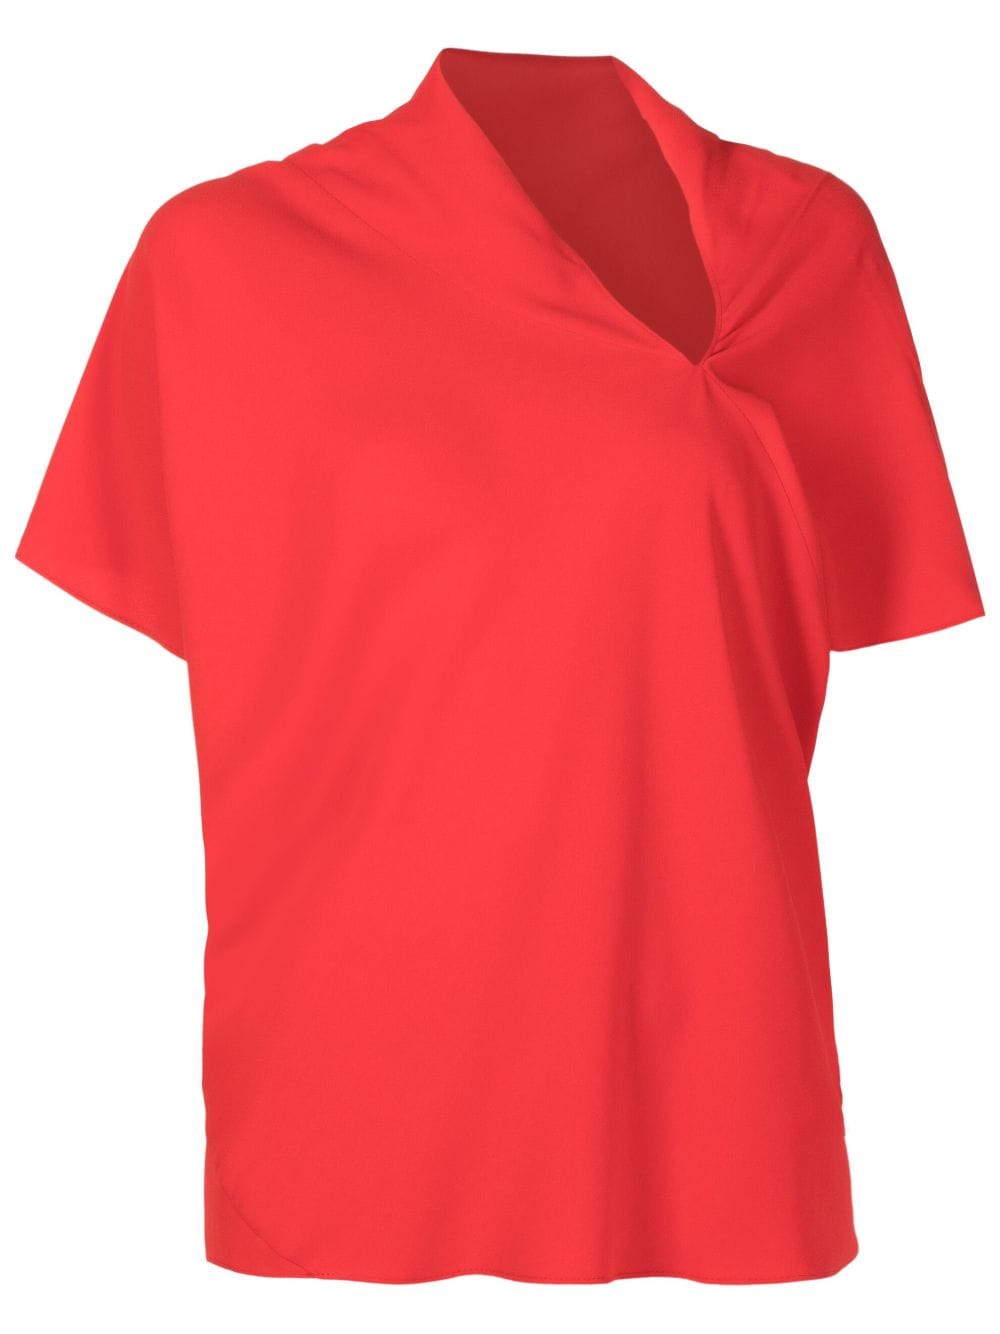 Uma | Raquel Davidowicz asymmetric draped-detail blouse - Red von Uma | Raquel Davidowicz